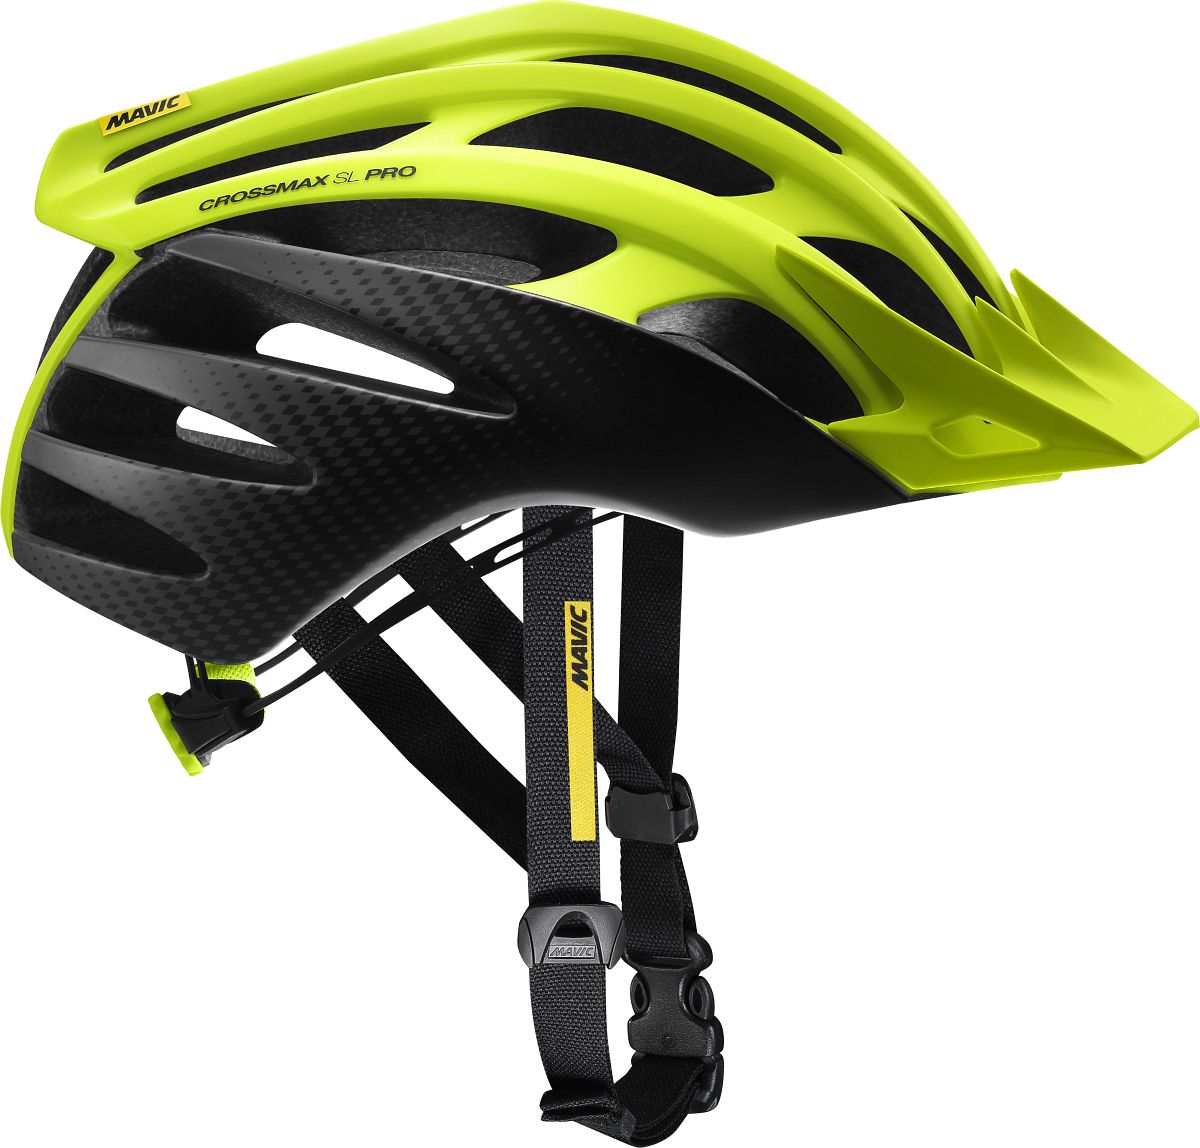 Mavic Crossmax SL Pro MIPS MTB Fahrrad Helm gelb/schwarz 2019 | von Top